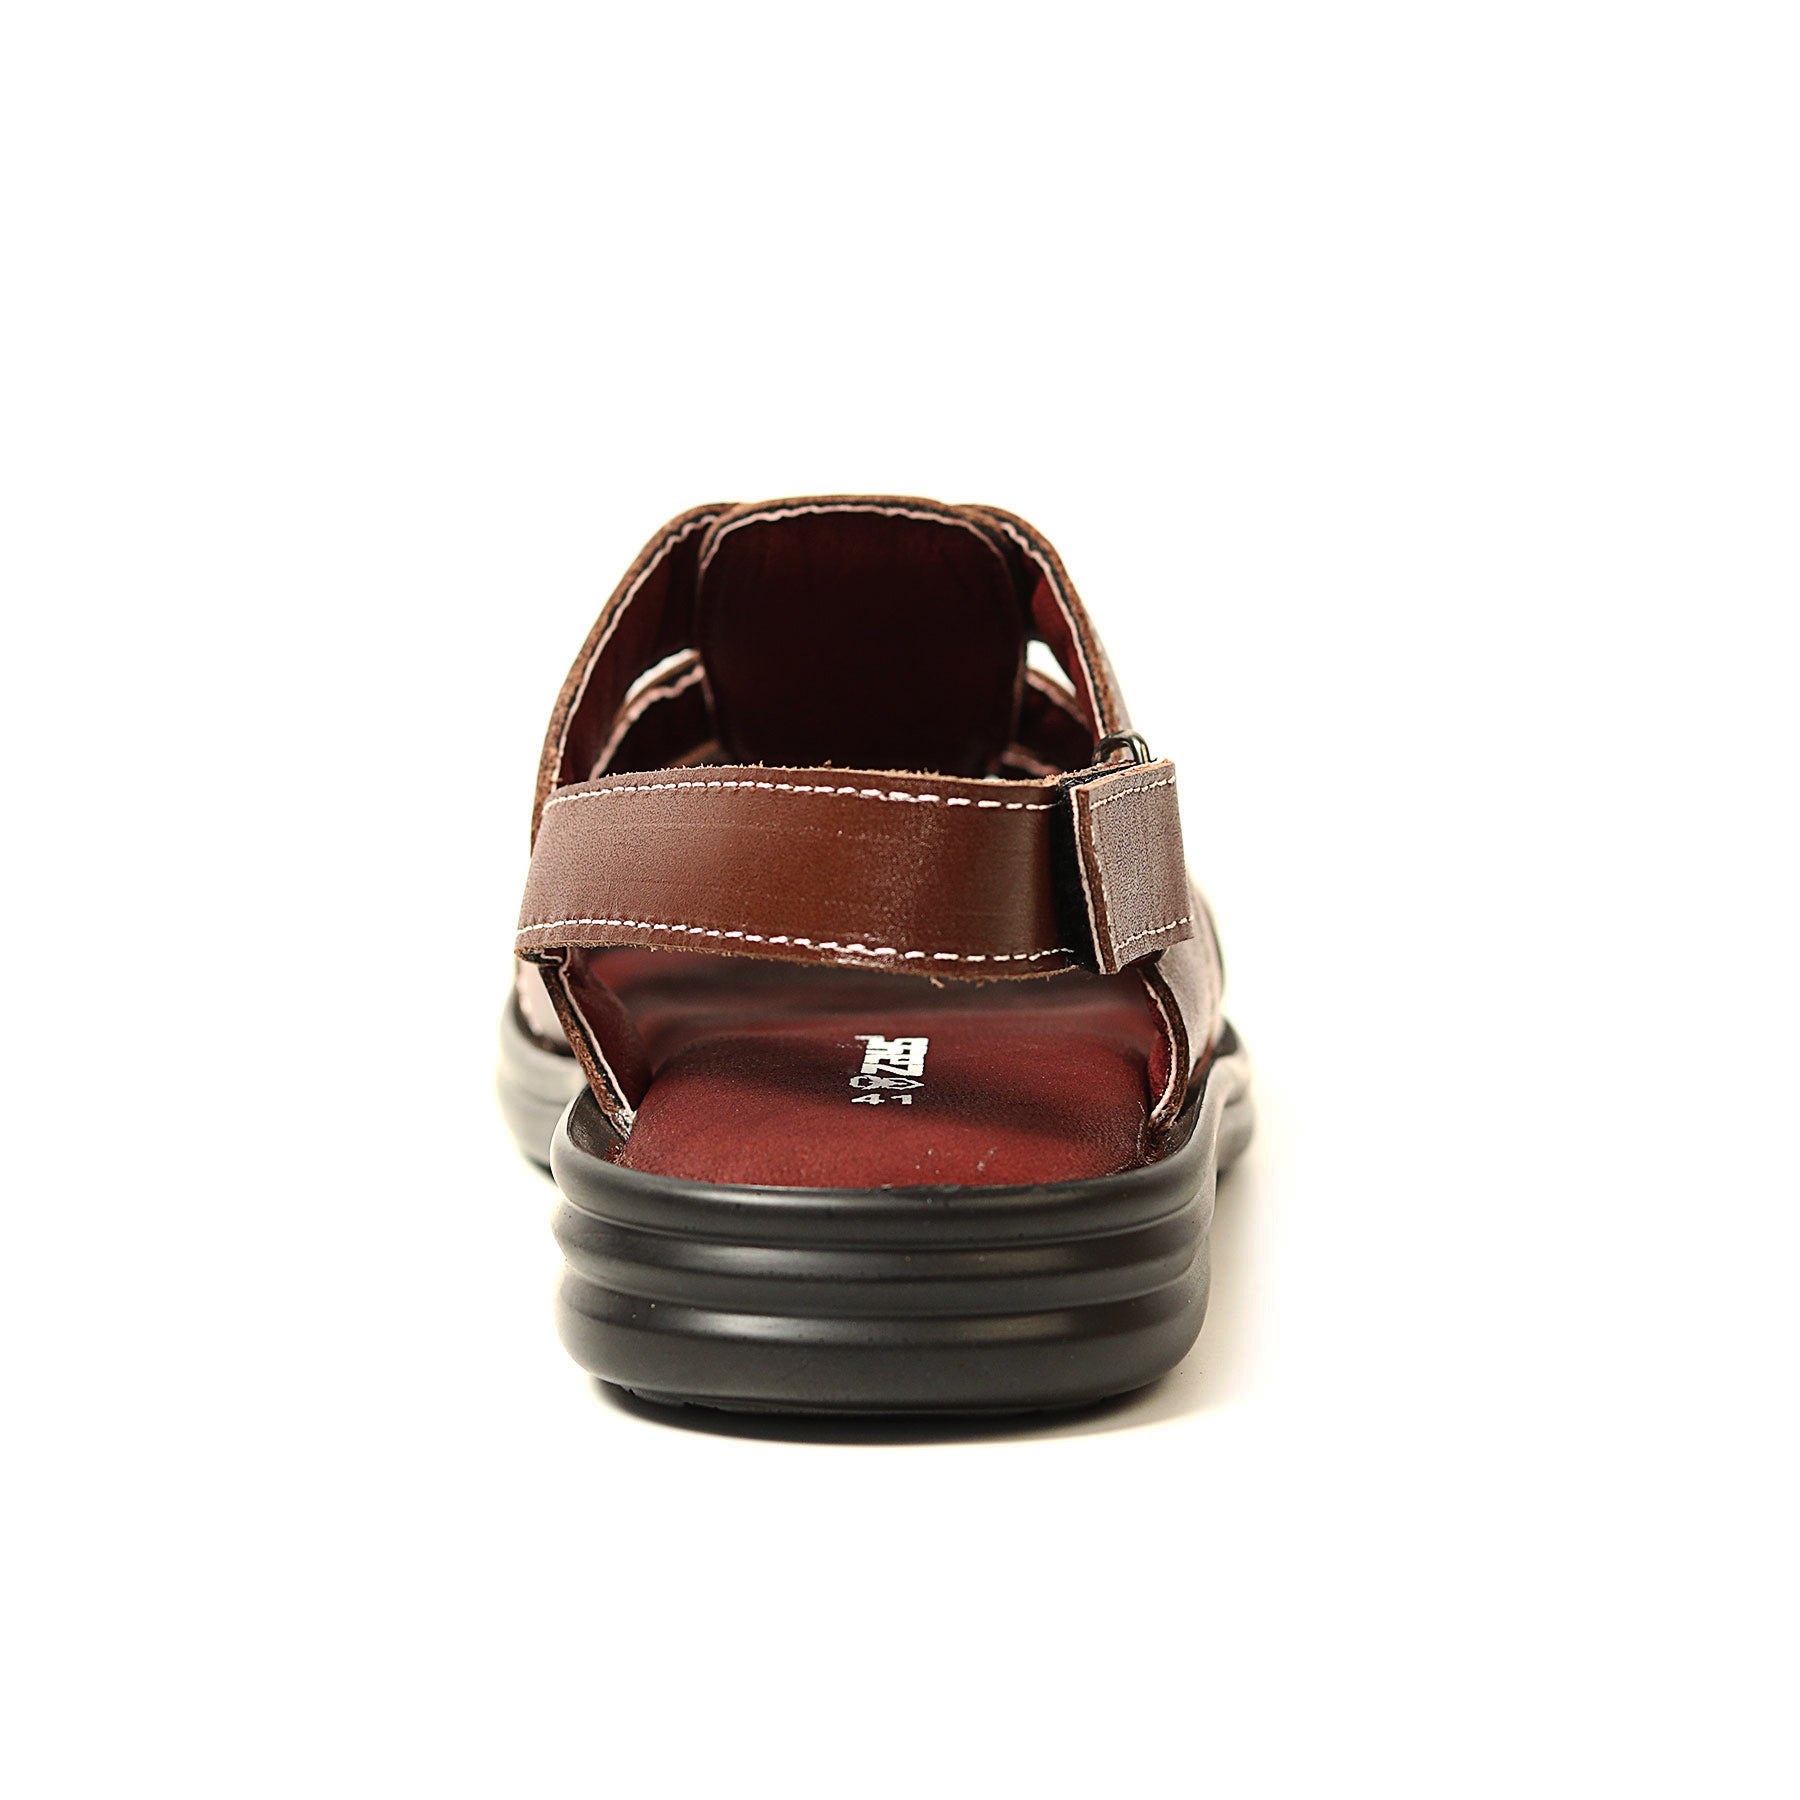 Zays Leather Sandal For Men (Chocolate) - ZA16